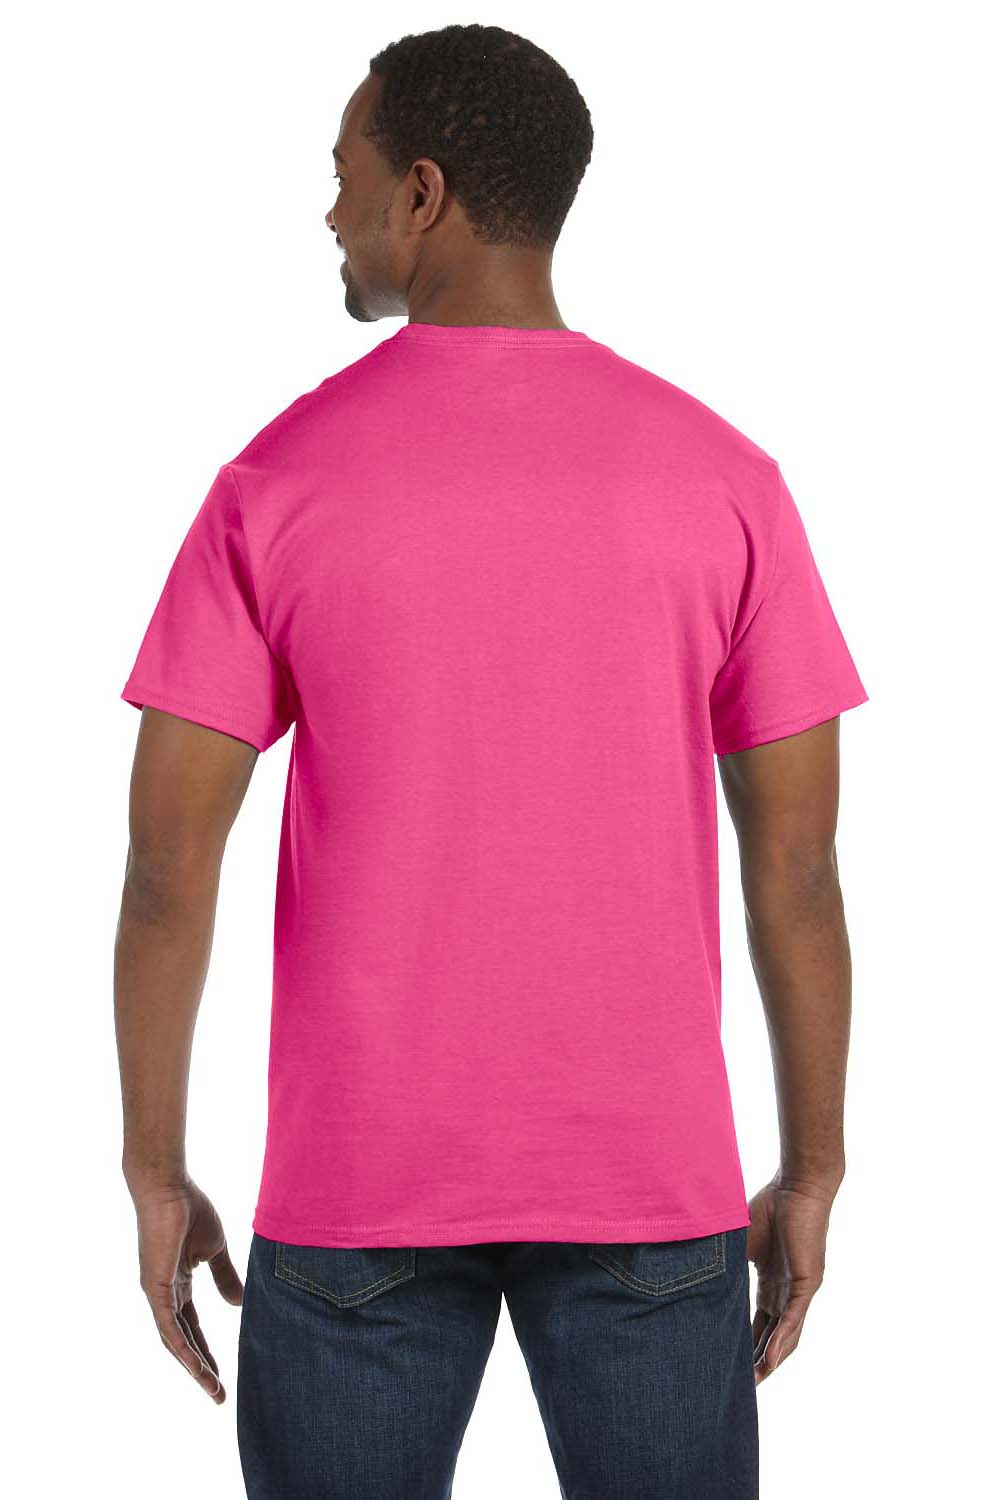 Hanes 5250T Mens ComfortSoft Short Sleeve Crewneck T-Shirt Wow Pink Back